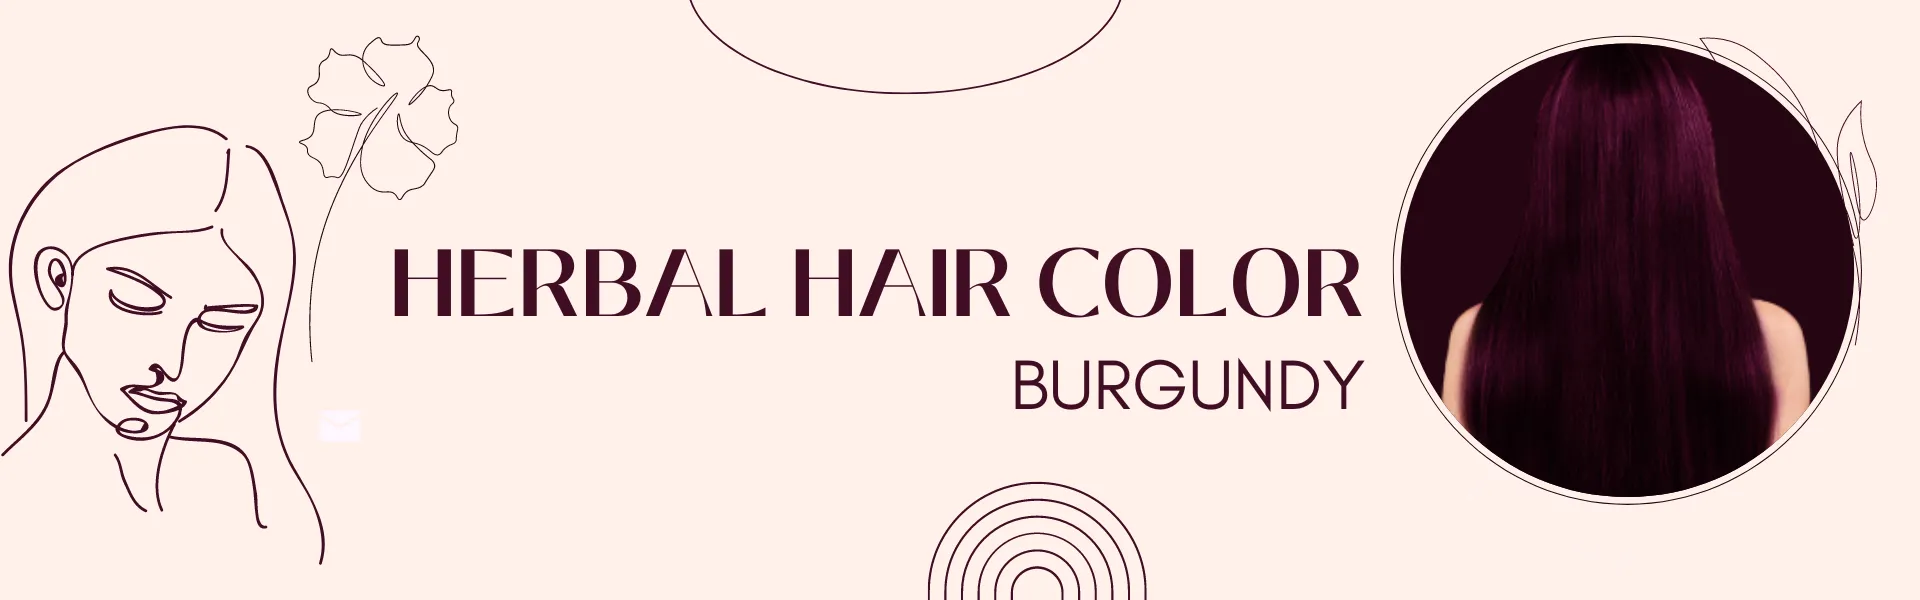 HERBAL HAIR COLOR burgundy - www.dkihenna.com